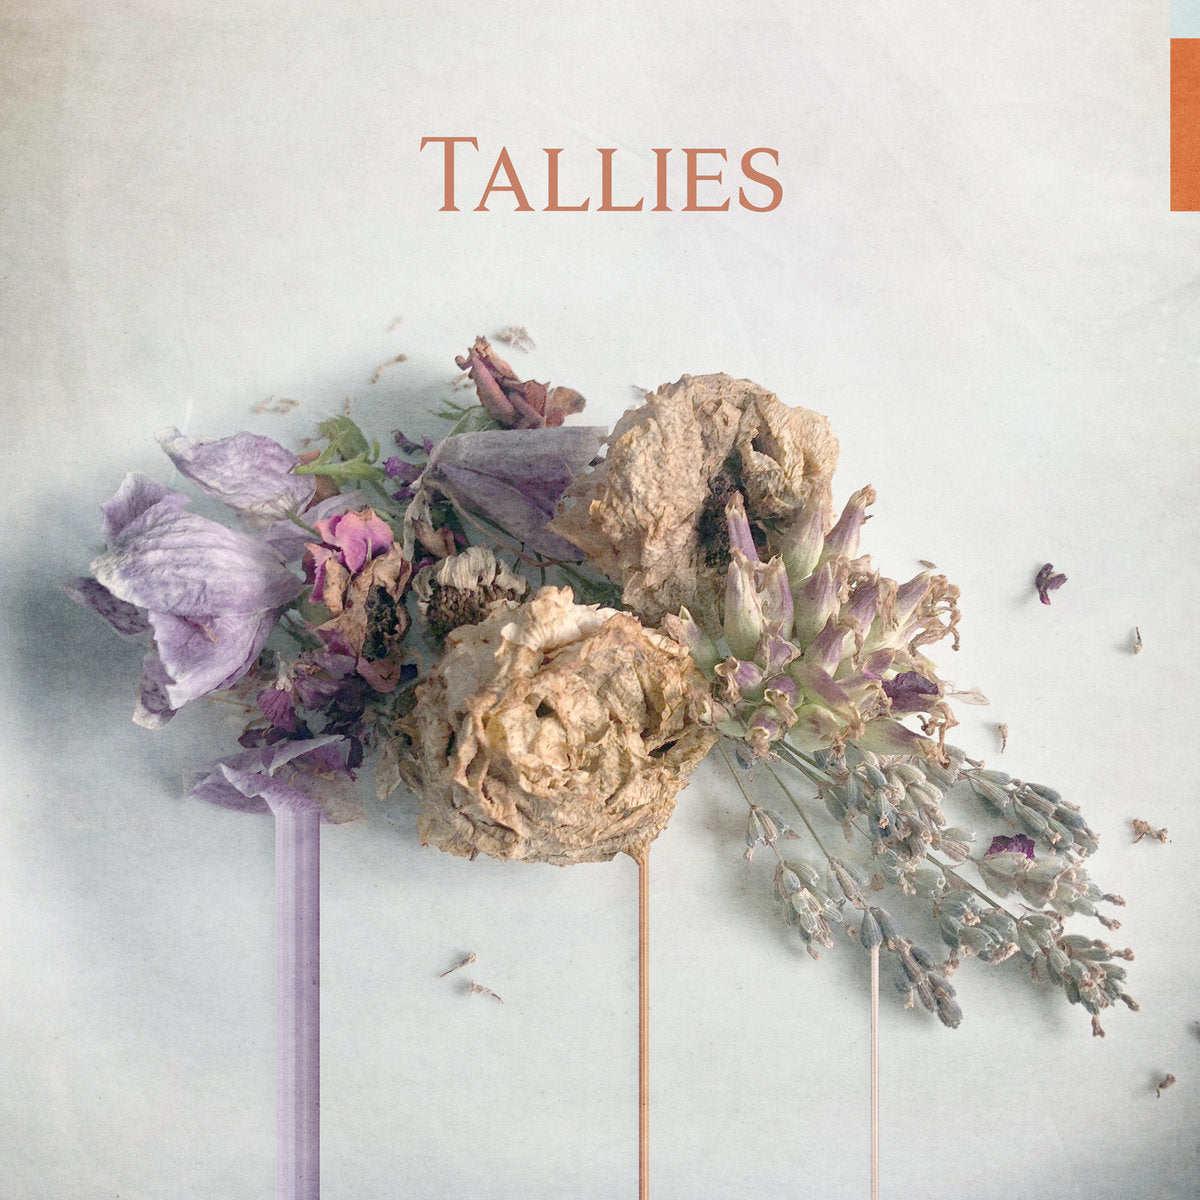 Tallies - Tallies (Colored Vinyl)